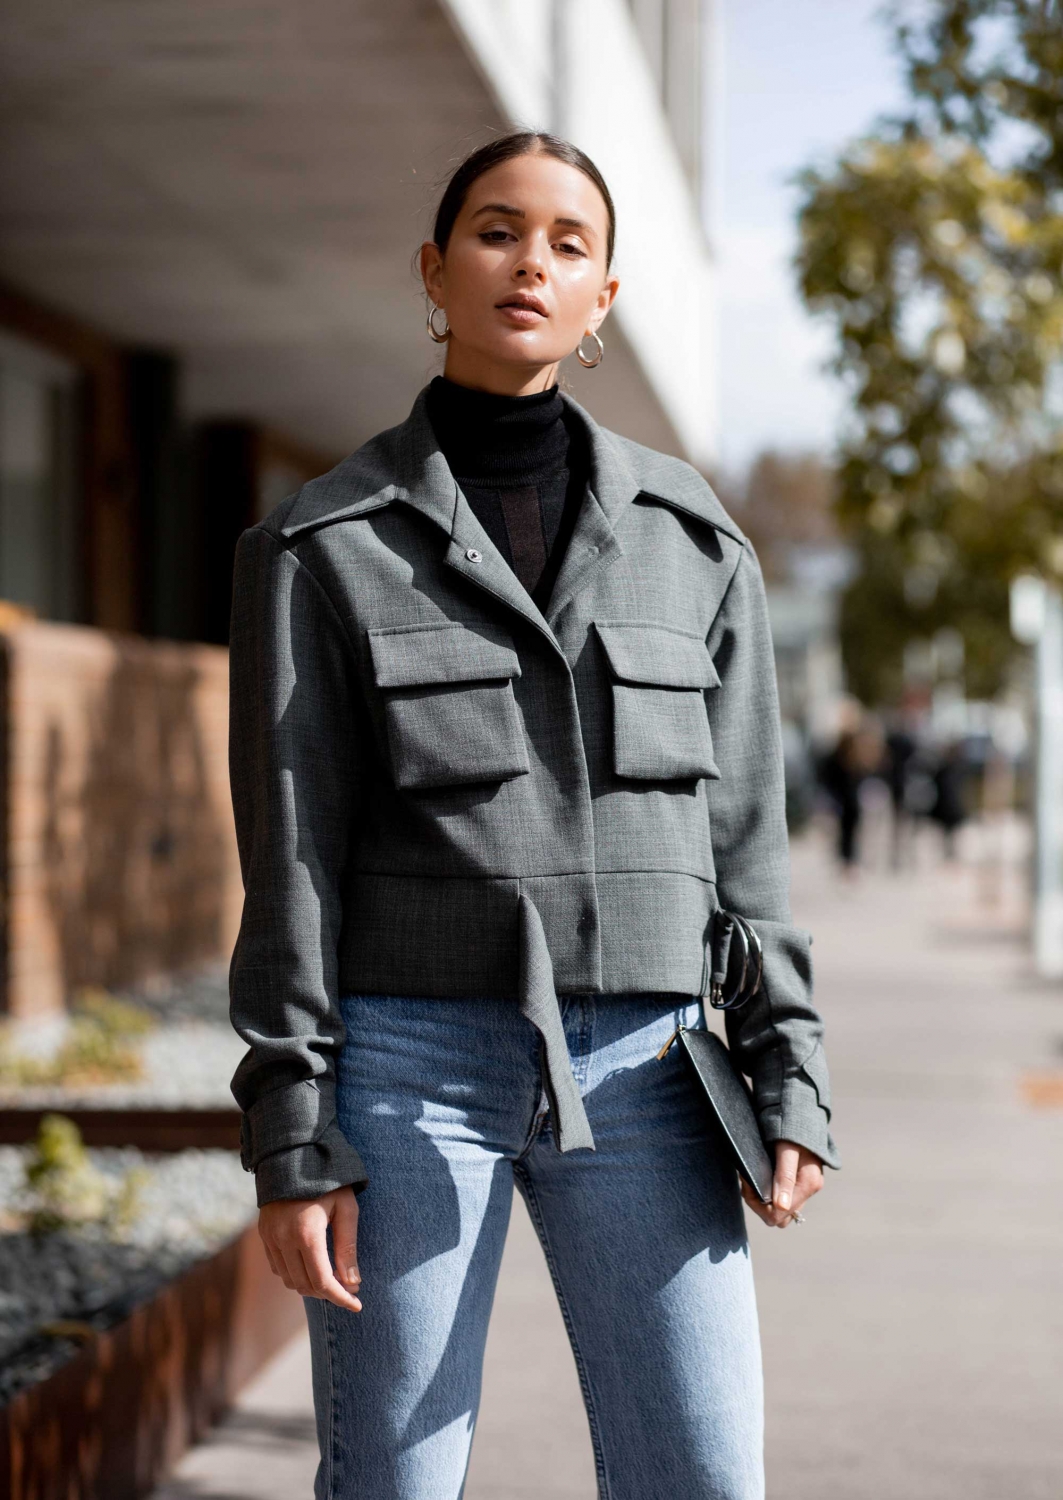 MBFWA | fashion week sydney | Harper and Harley | Denim and grey jacket | Paris Georgia | LEVIS